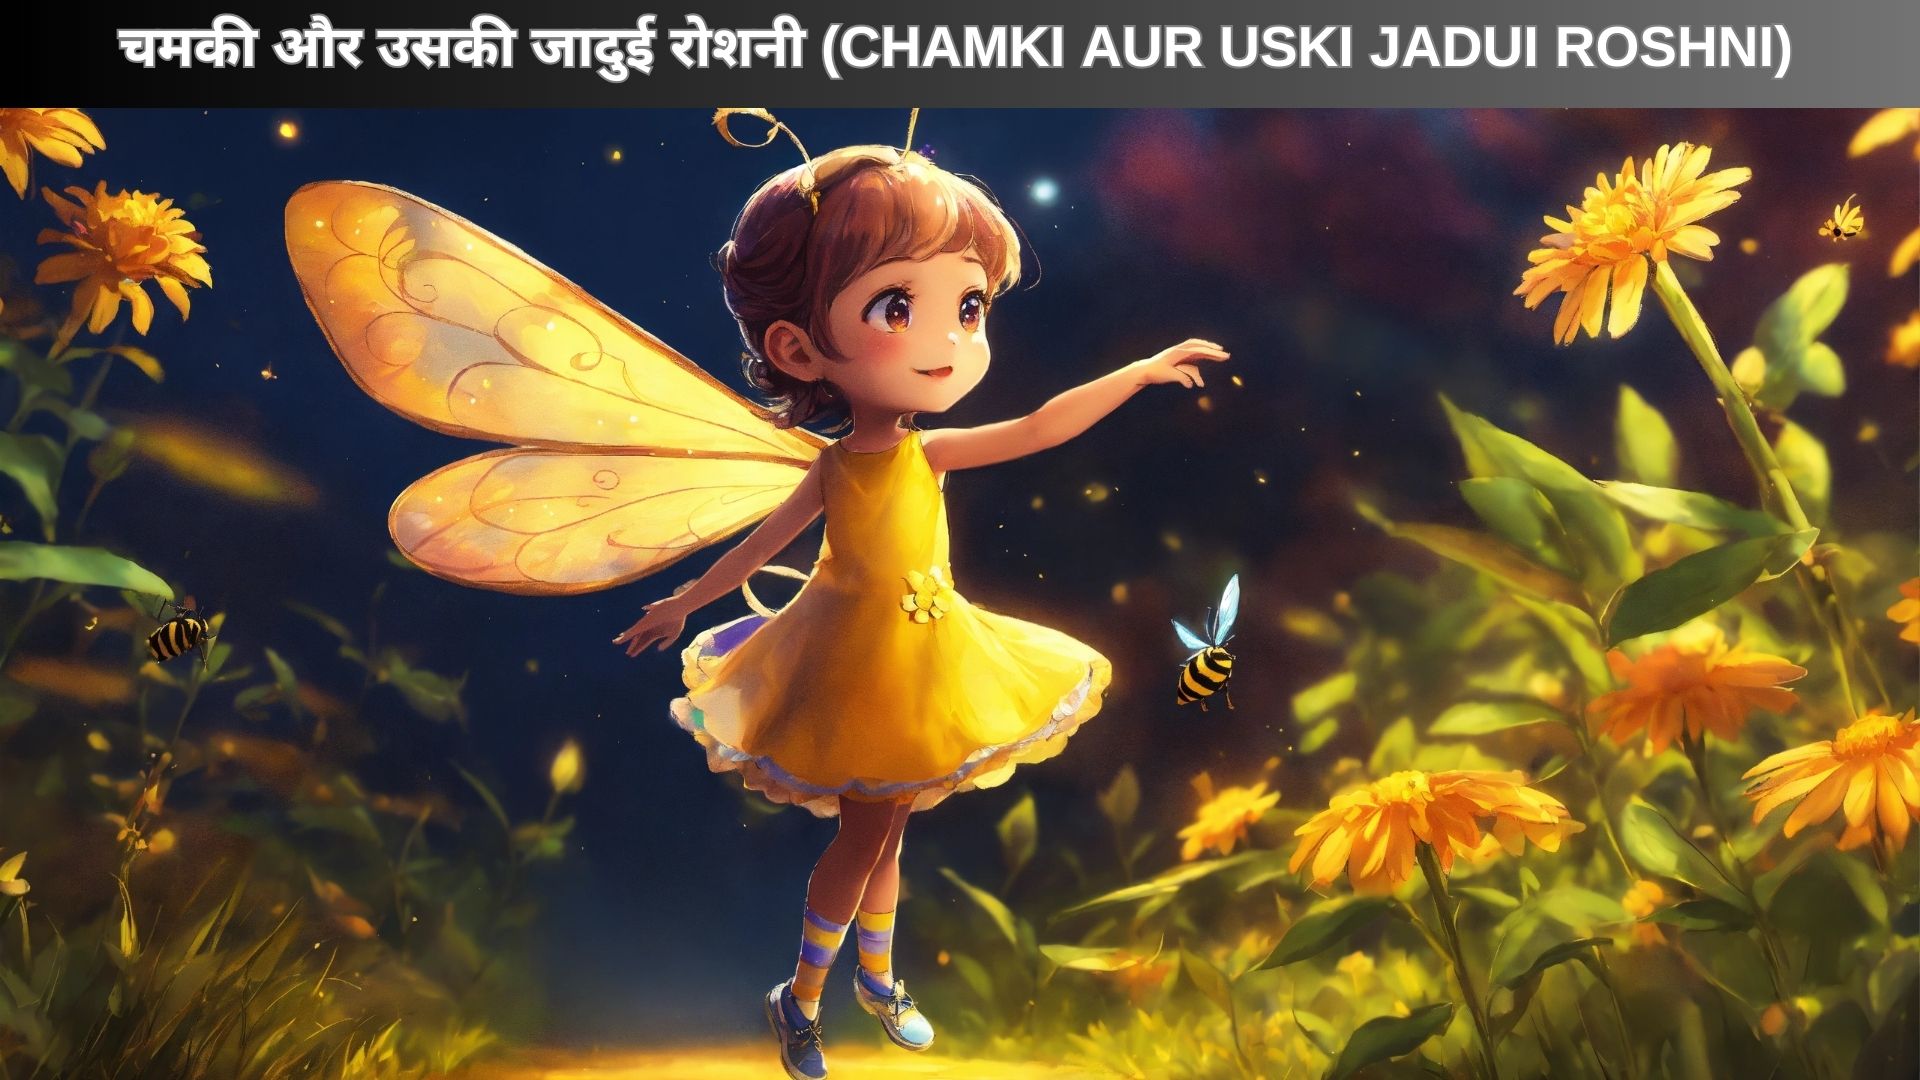 चमकी और उसकी जादुई रोशनी (Chamki aur Uski Jadui Roshni) Bedtime Stories